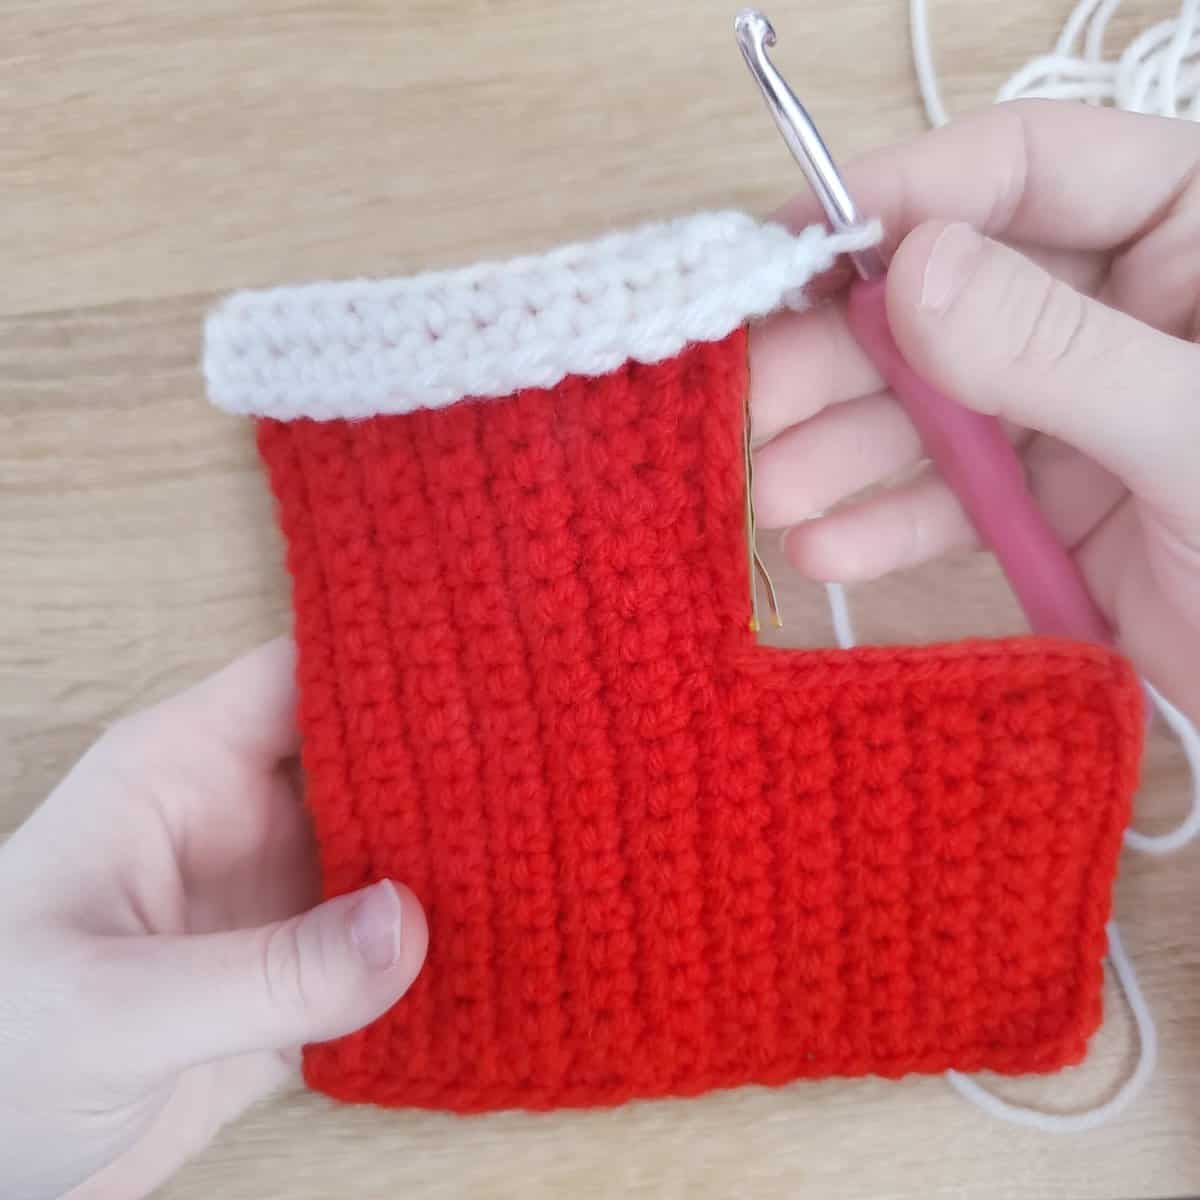 BLO single crochet row 